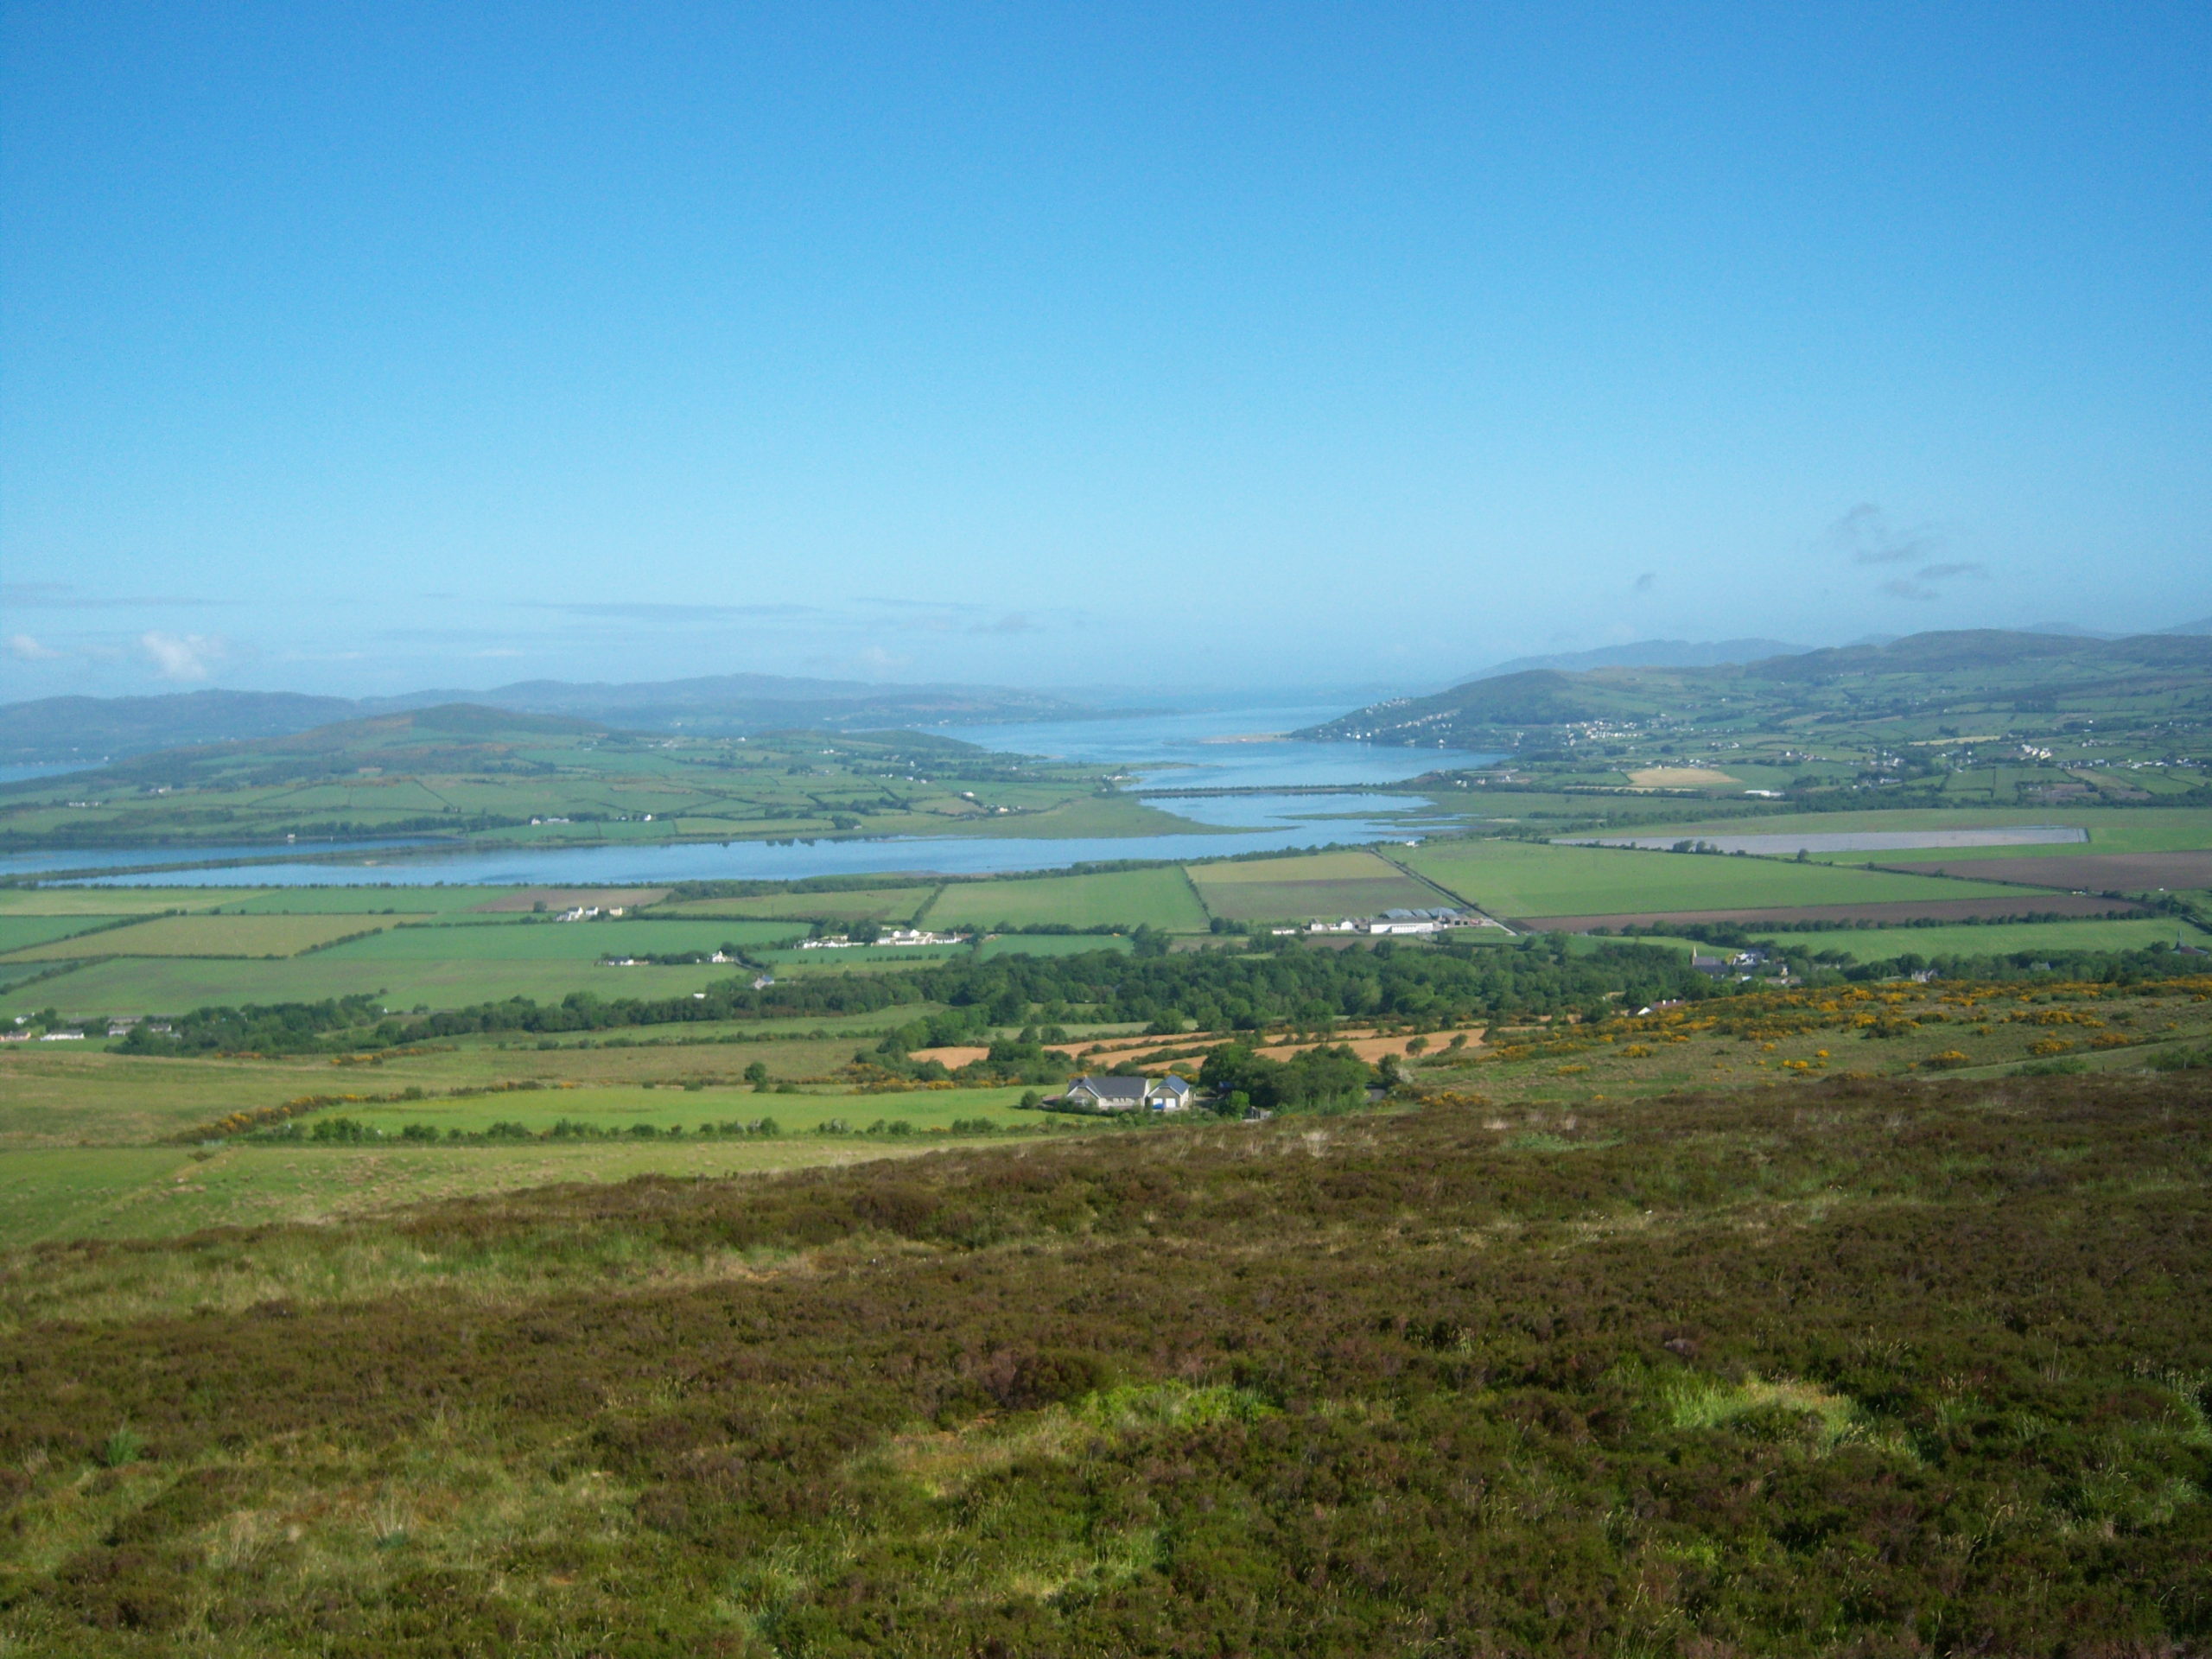 The Inishowen Peninsula